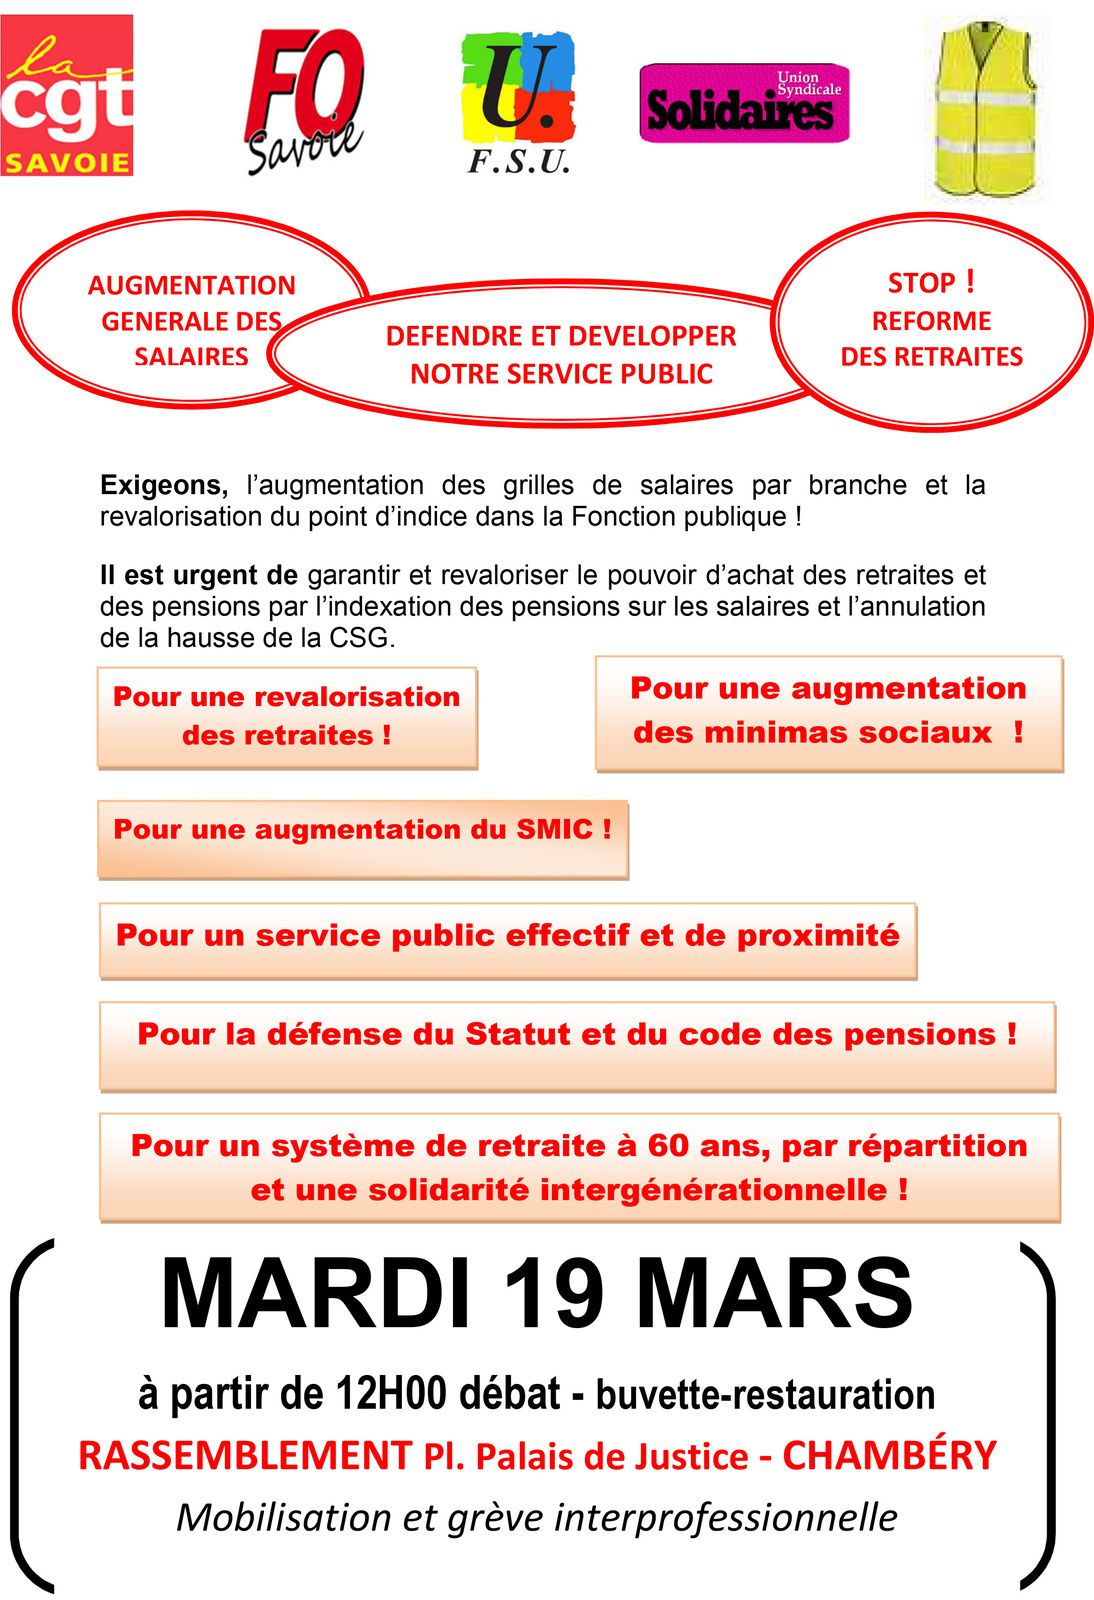 Manifestation Inter professionnelle à Chambéry 19 Mars 